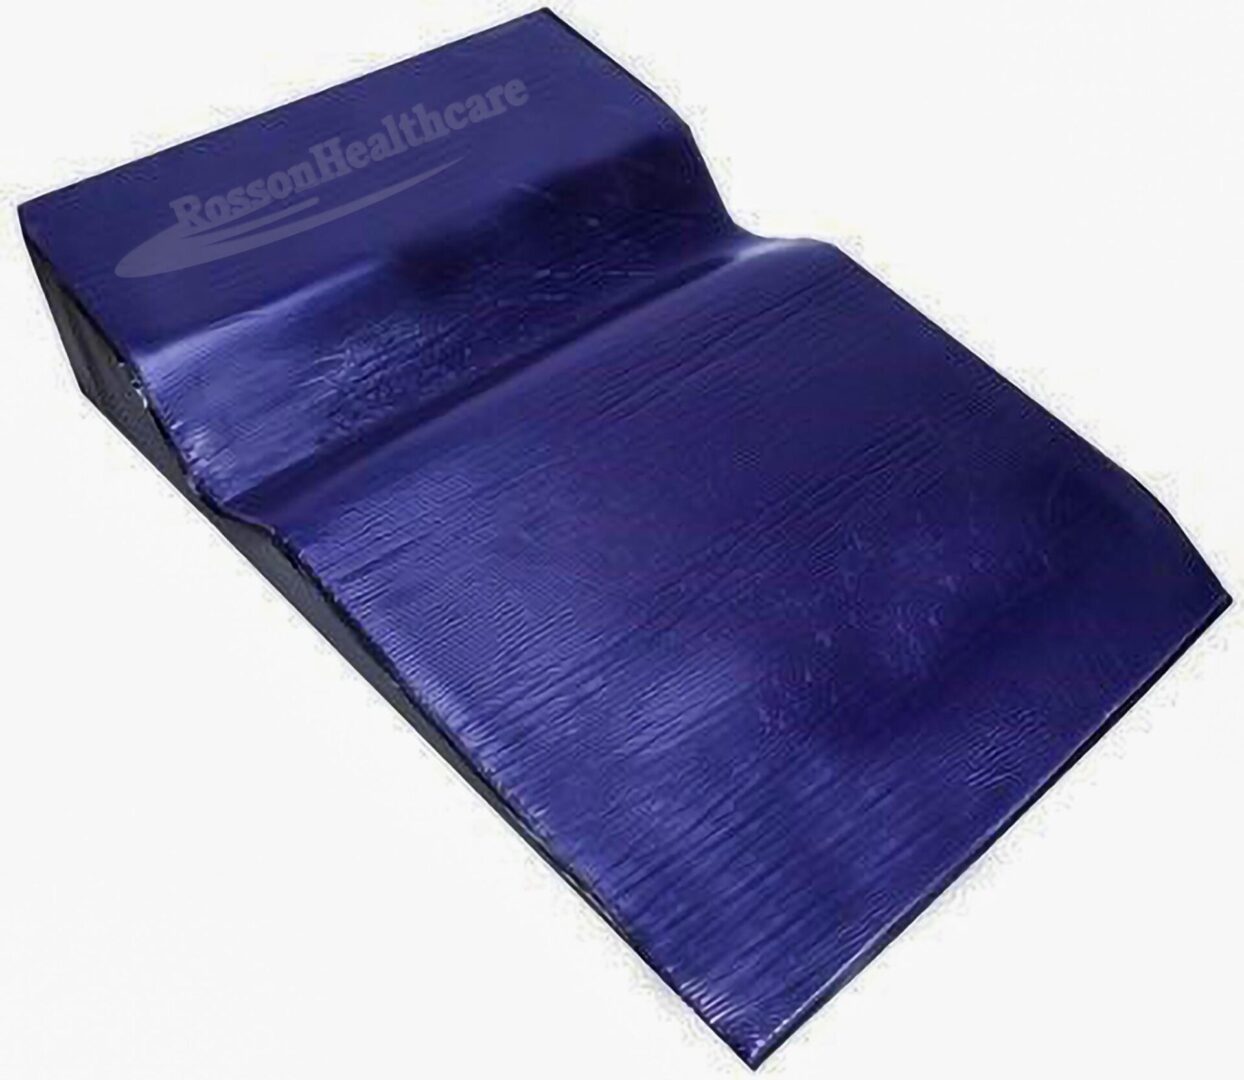 A blue mat with the word " cloudburst " written on it.